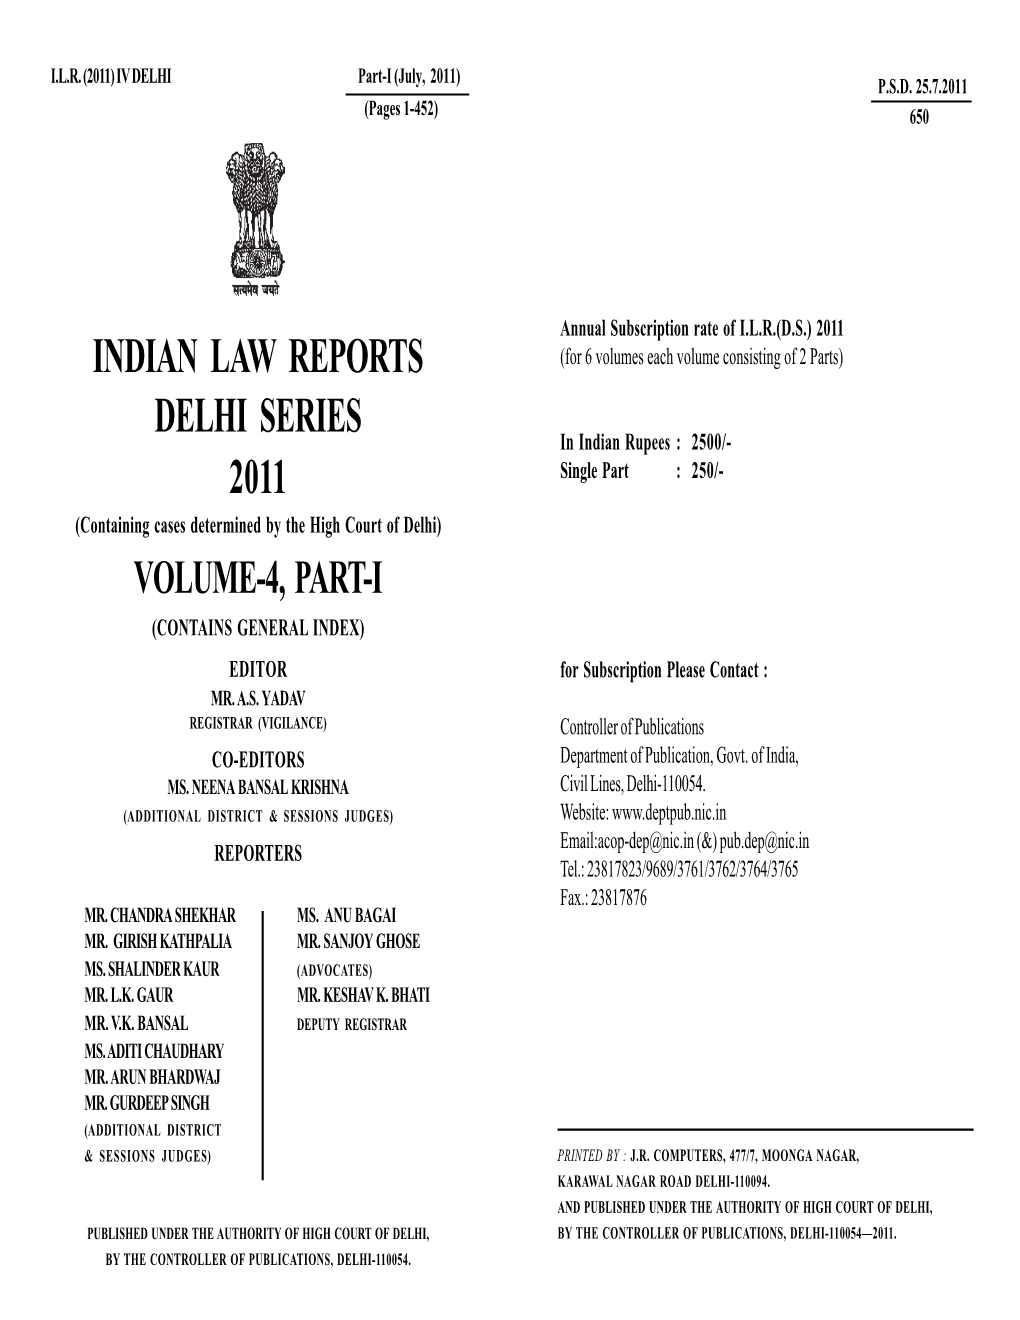 Indian Law Reports Delhi Series 2011